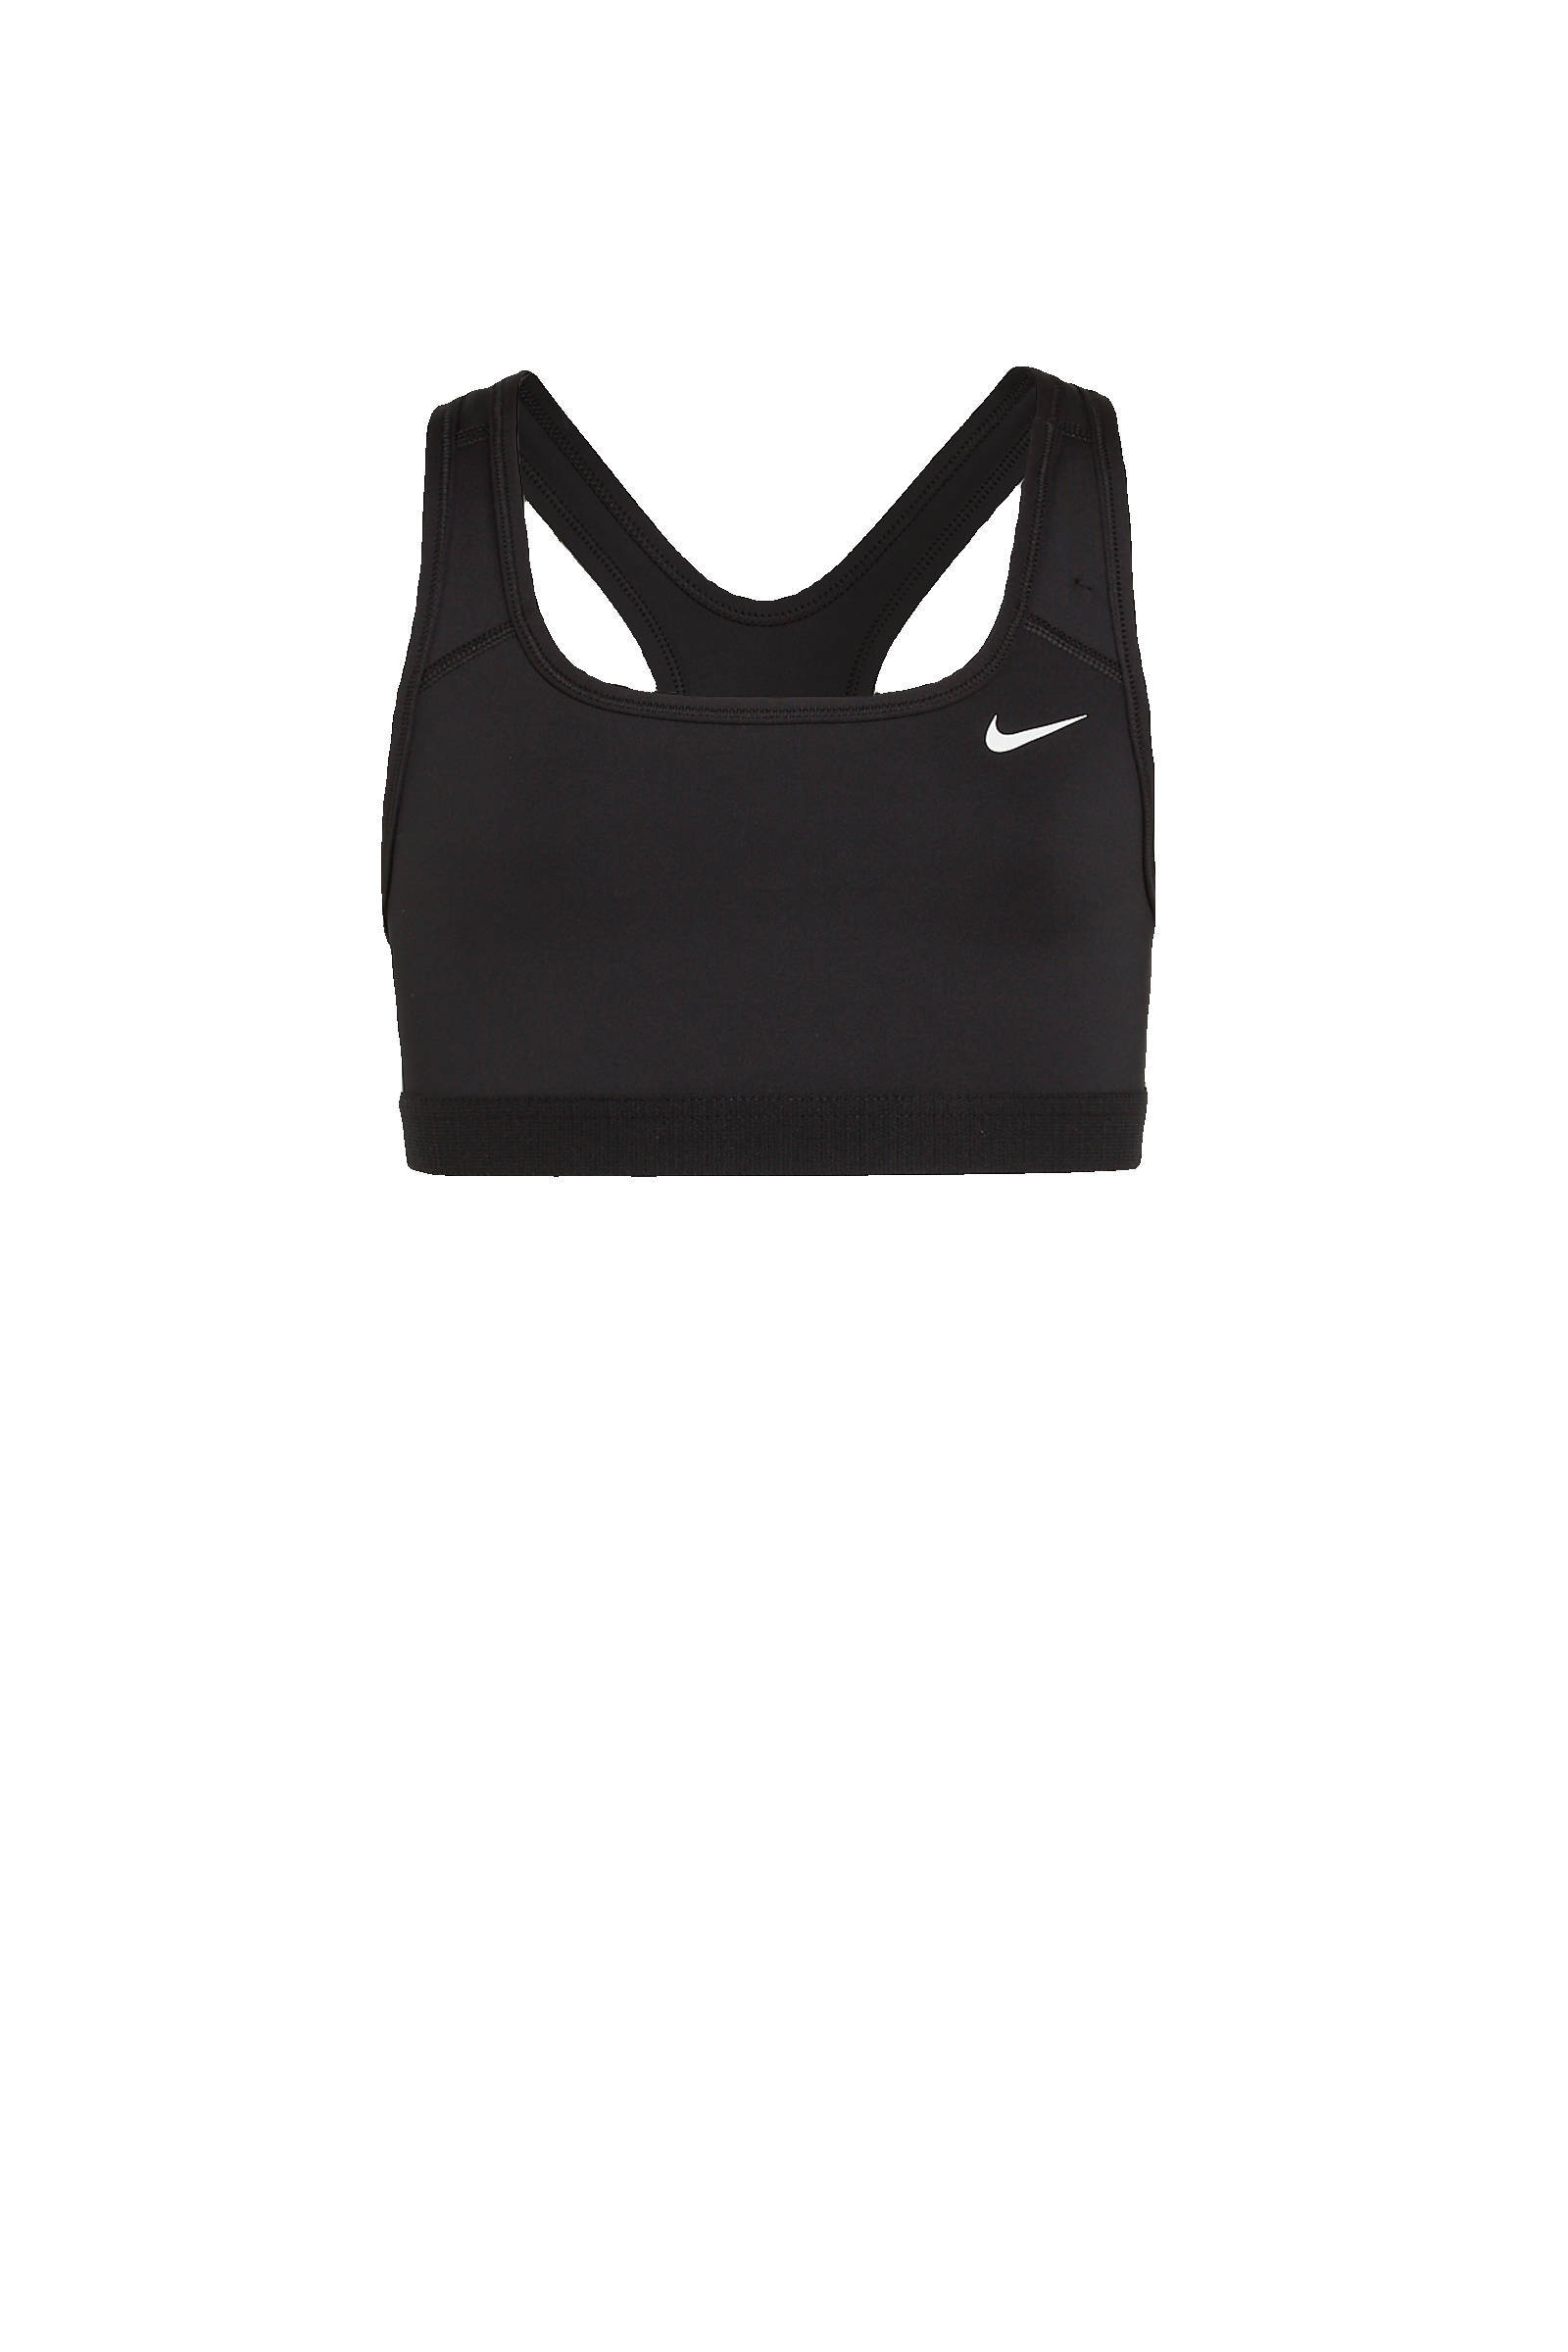 Nike Swoosh Sport bh voor meisjes Black/White Kind online kopen